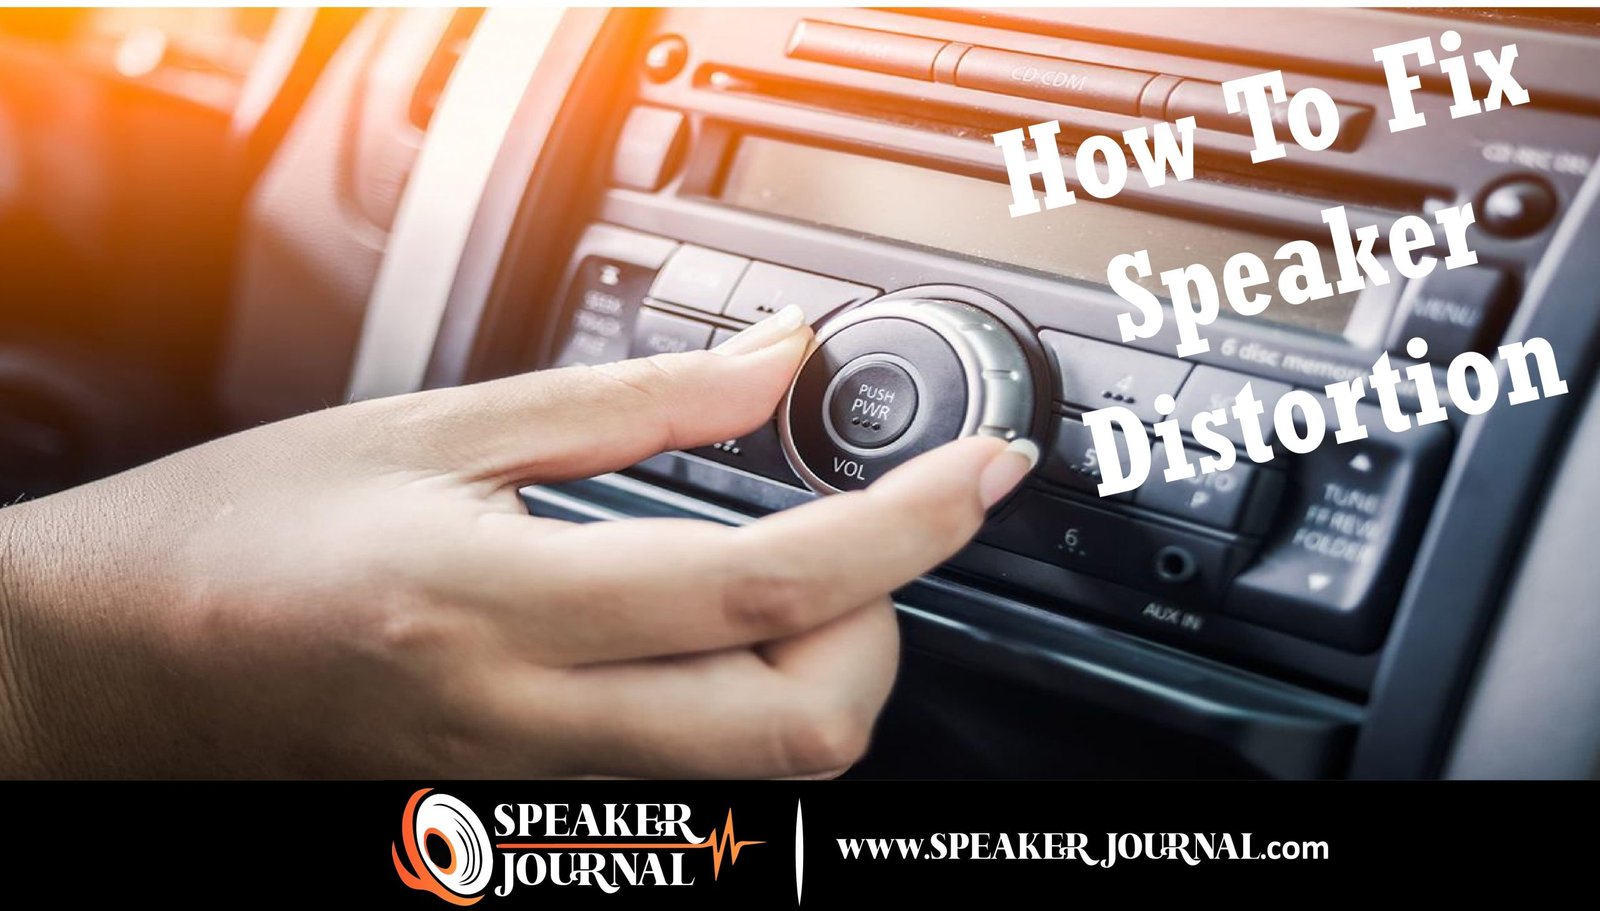 How To Fix Speaker Distortion by speakerjournal.com